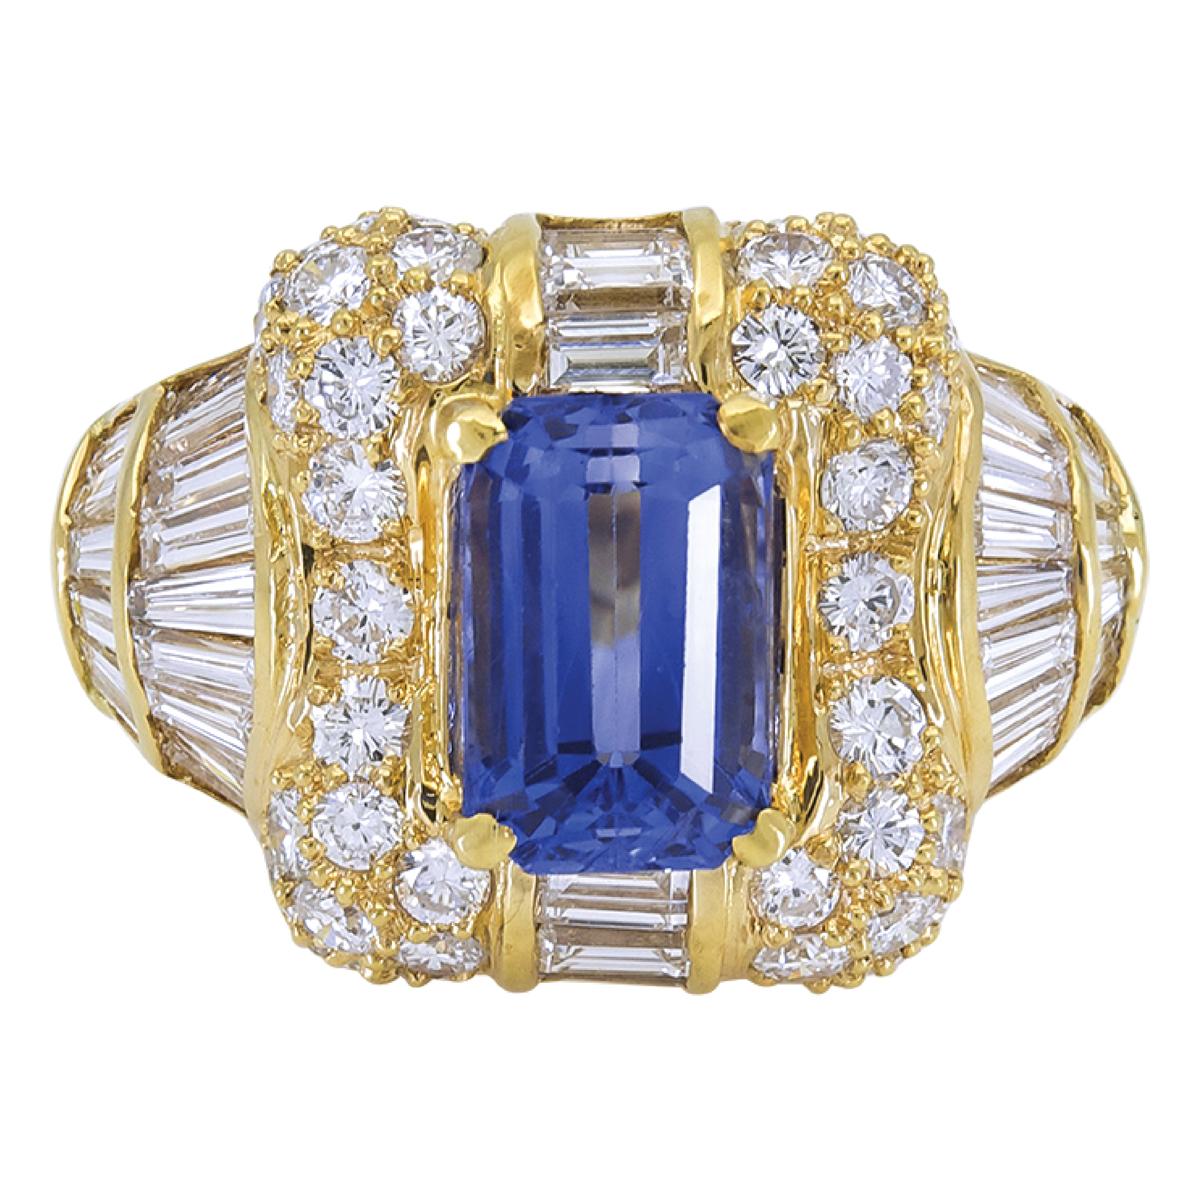 Sophia D. Emerald Cut Center Blue Sapphire and Diamonds Dome Ring